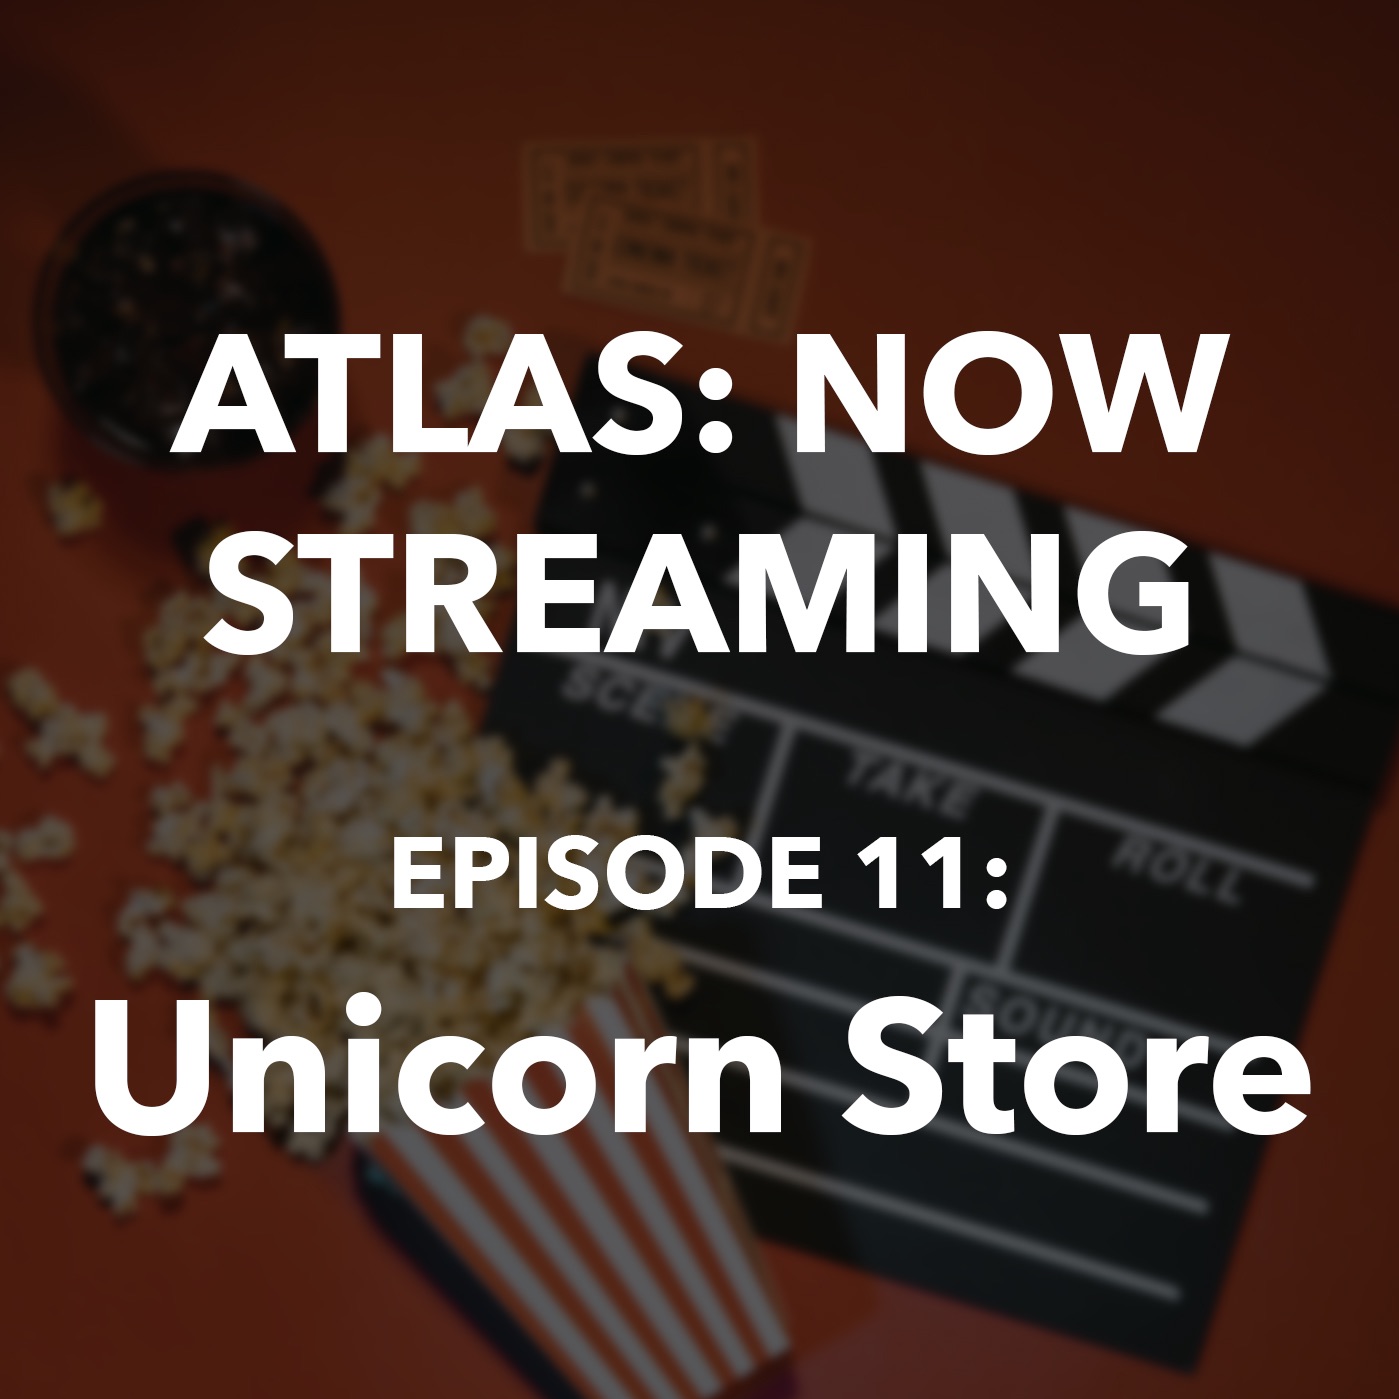 Atlas: Now Streaming Episode 11 - Unicorn Store